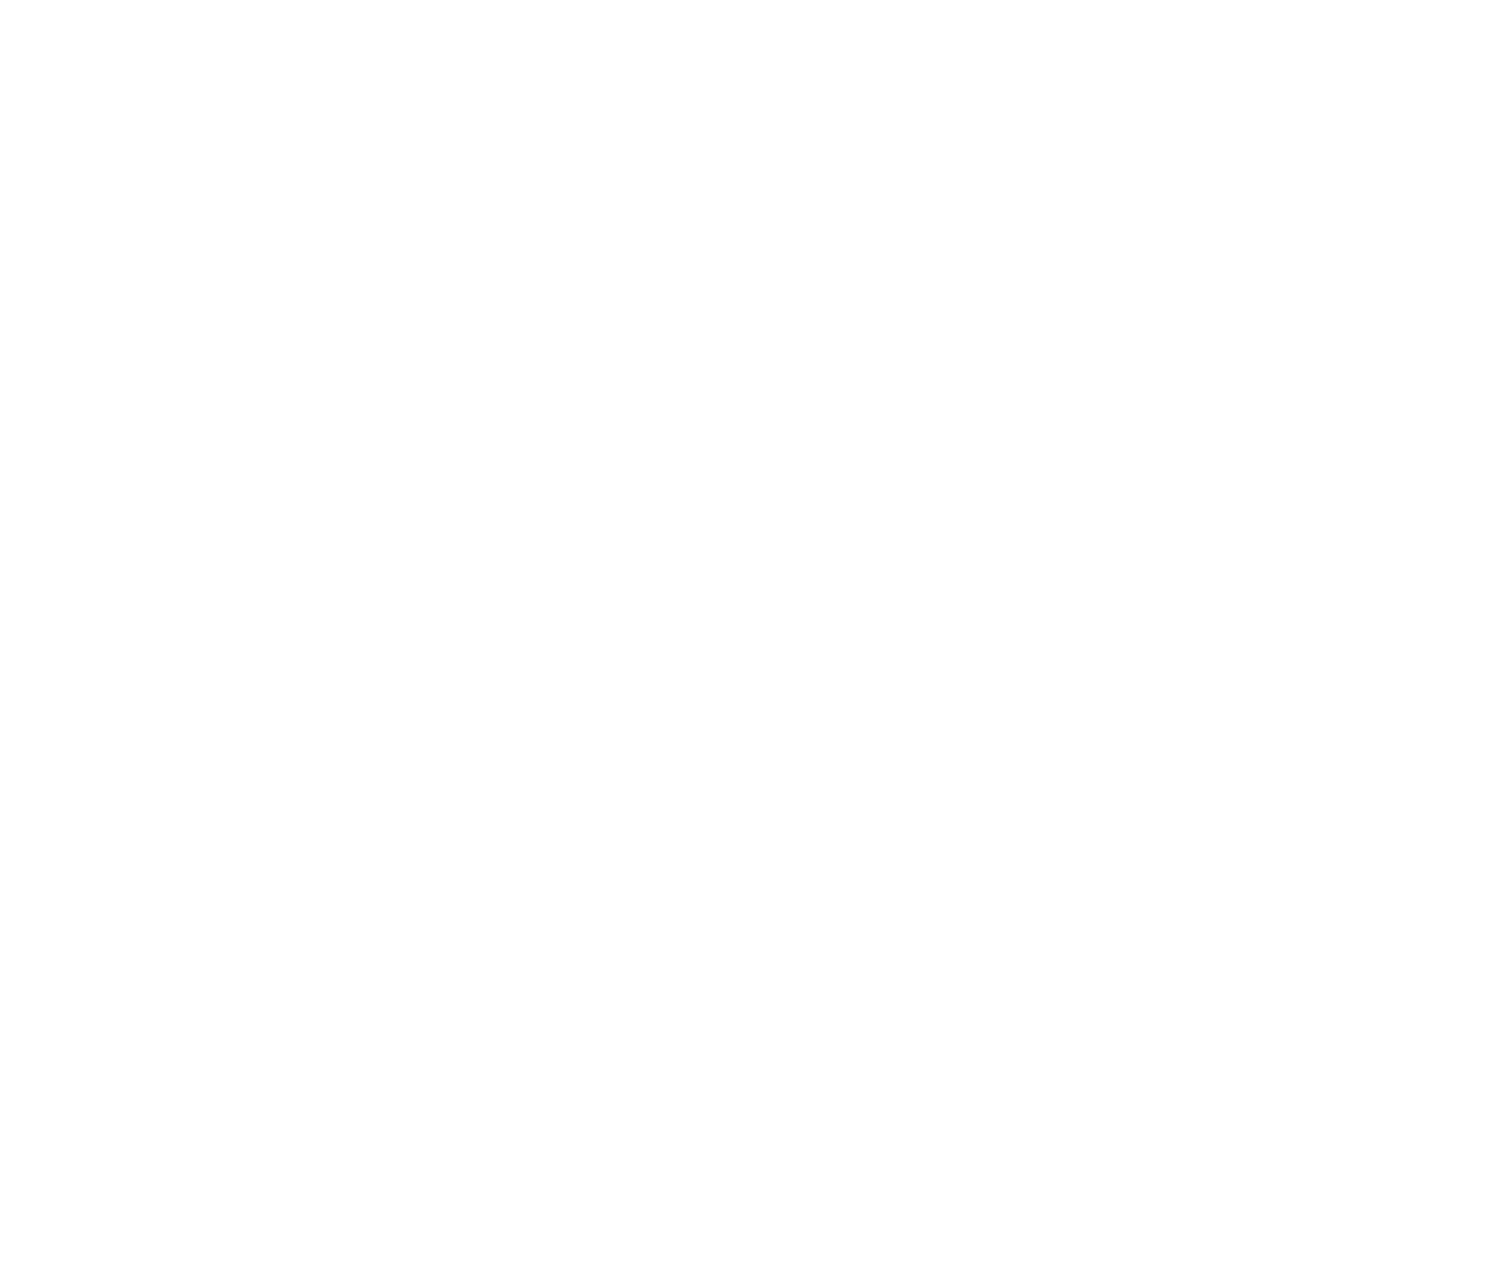 Vertex Pharmaceuticals logo for dark backgrounds (transparent PNG)